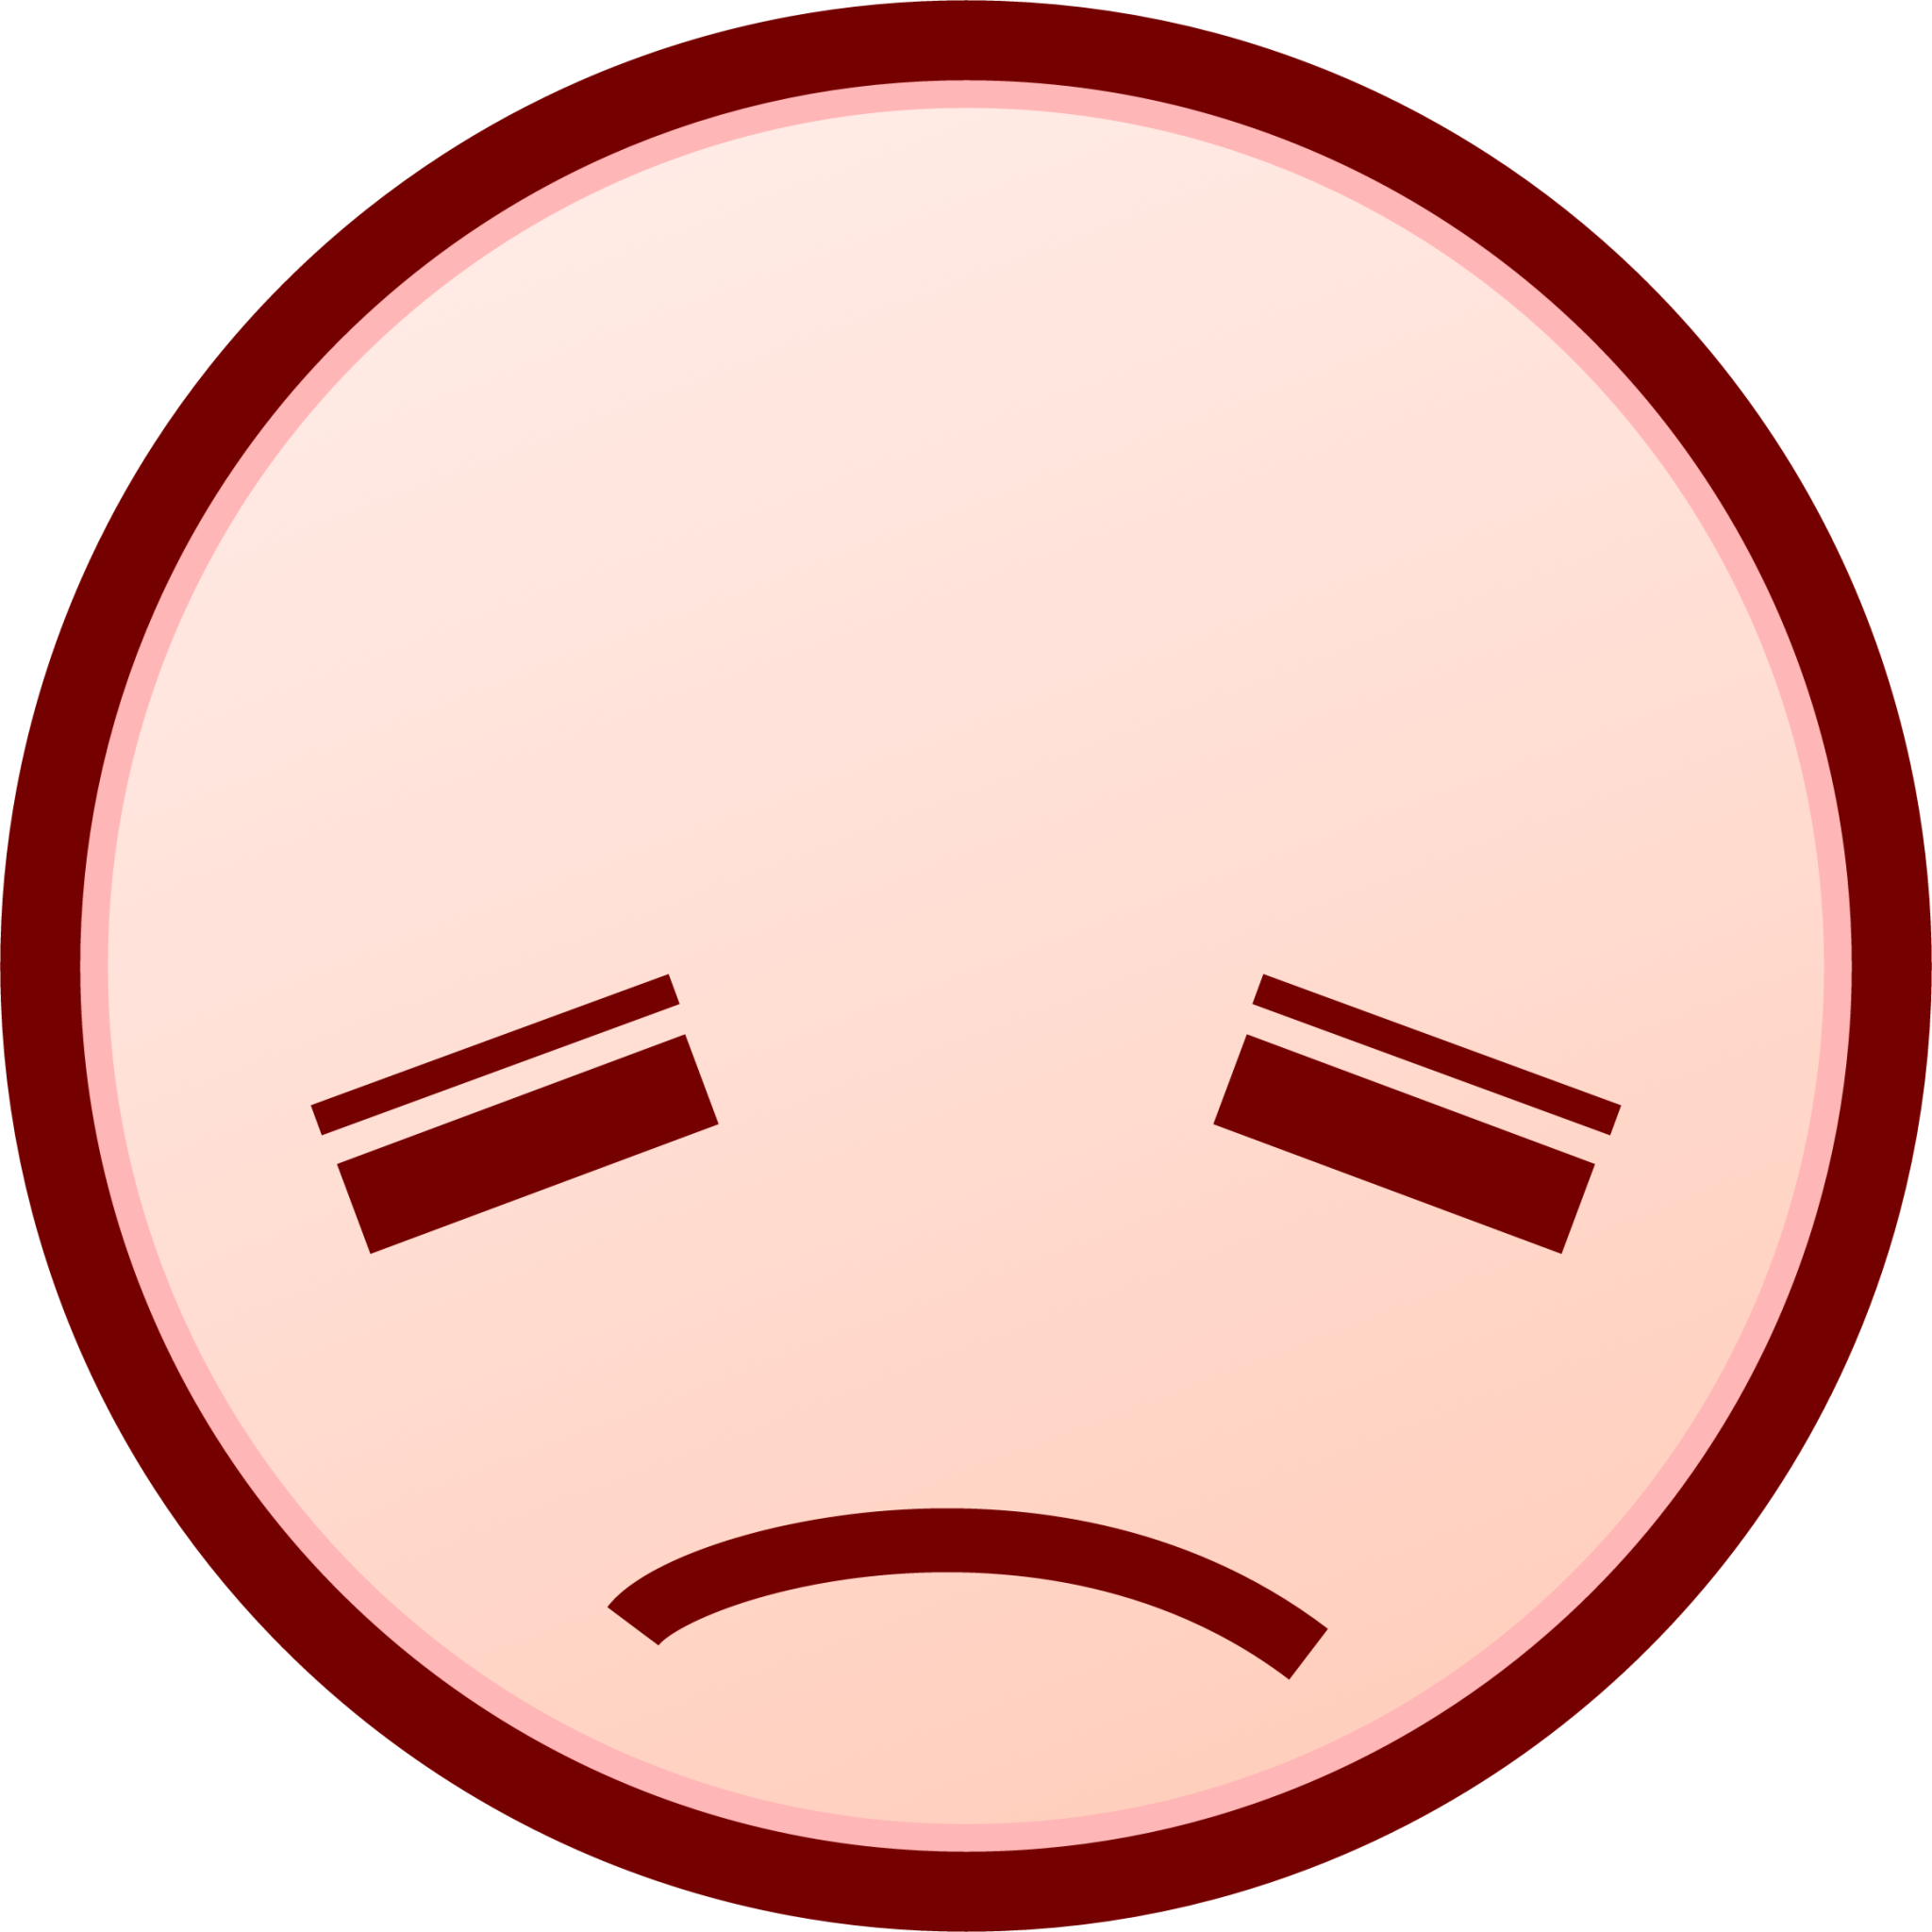 disappointed (white) emoji